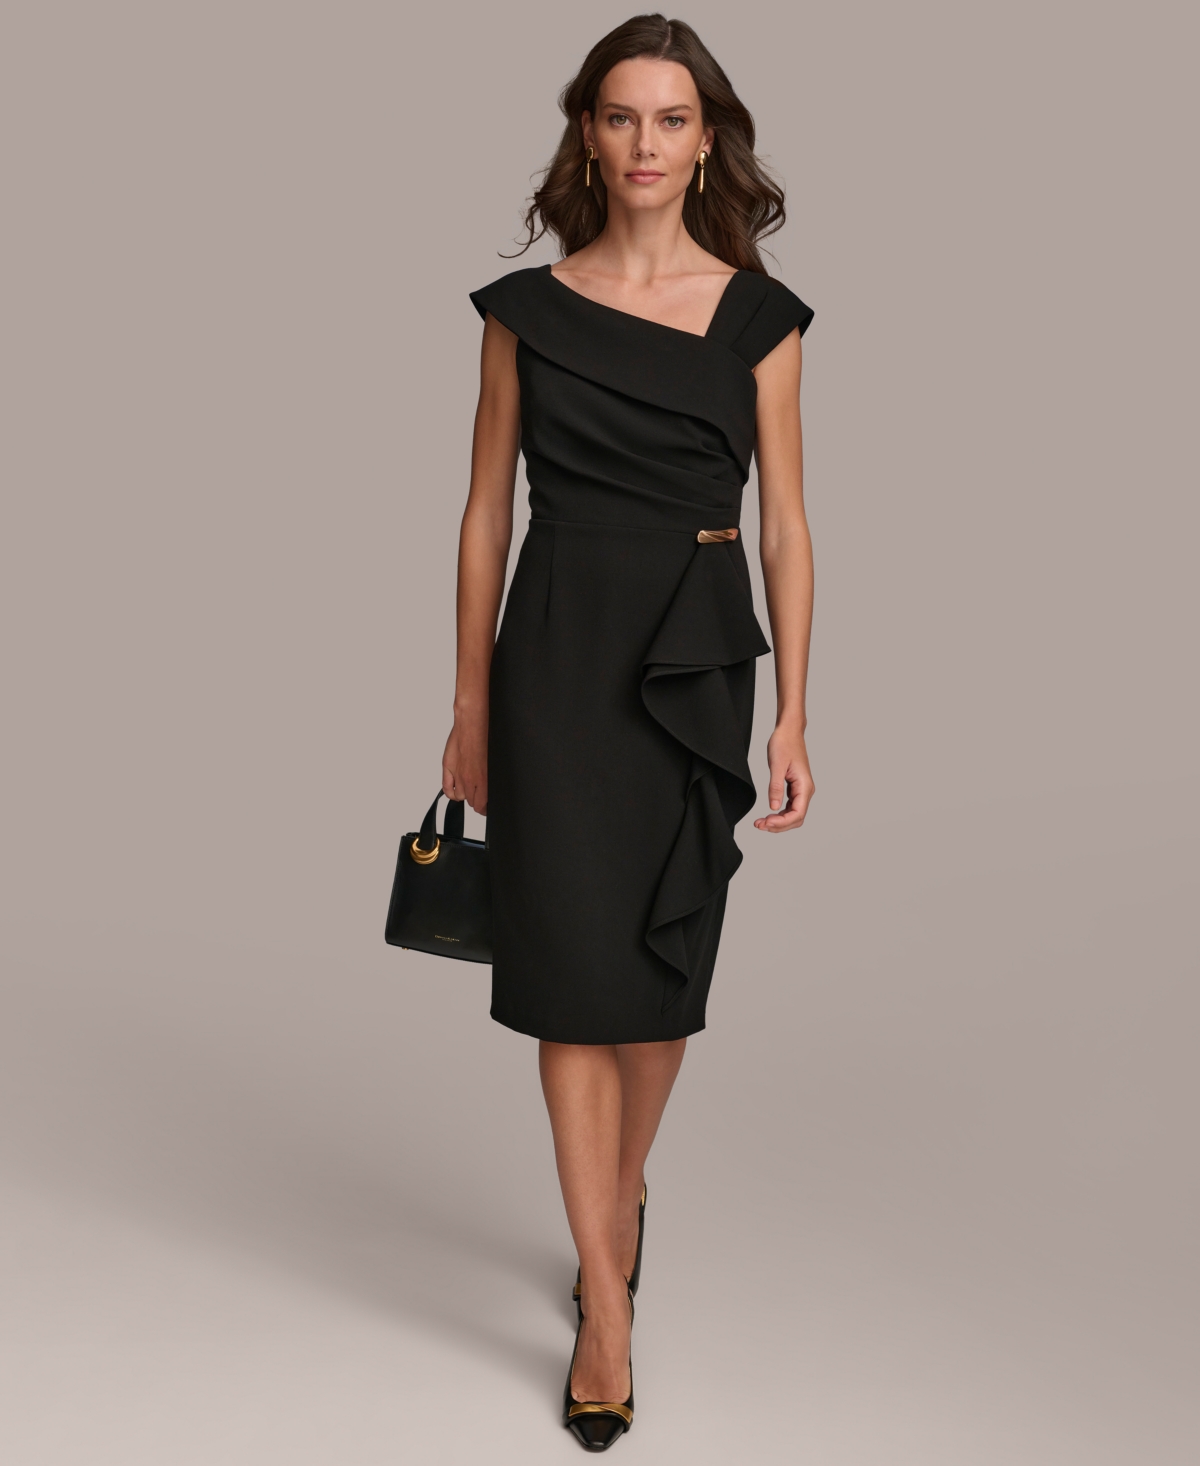 Women's Asymmetric Neckline Cap Sleeve Ruffle Trim Sheath Dress - Black